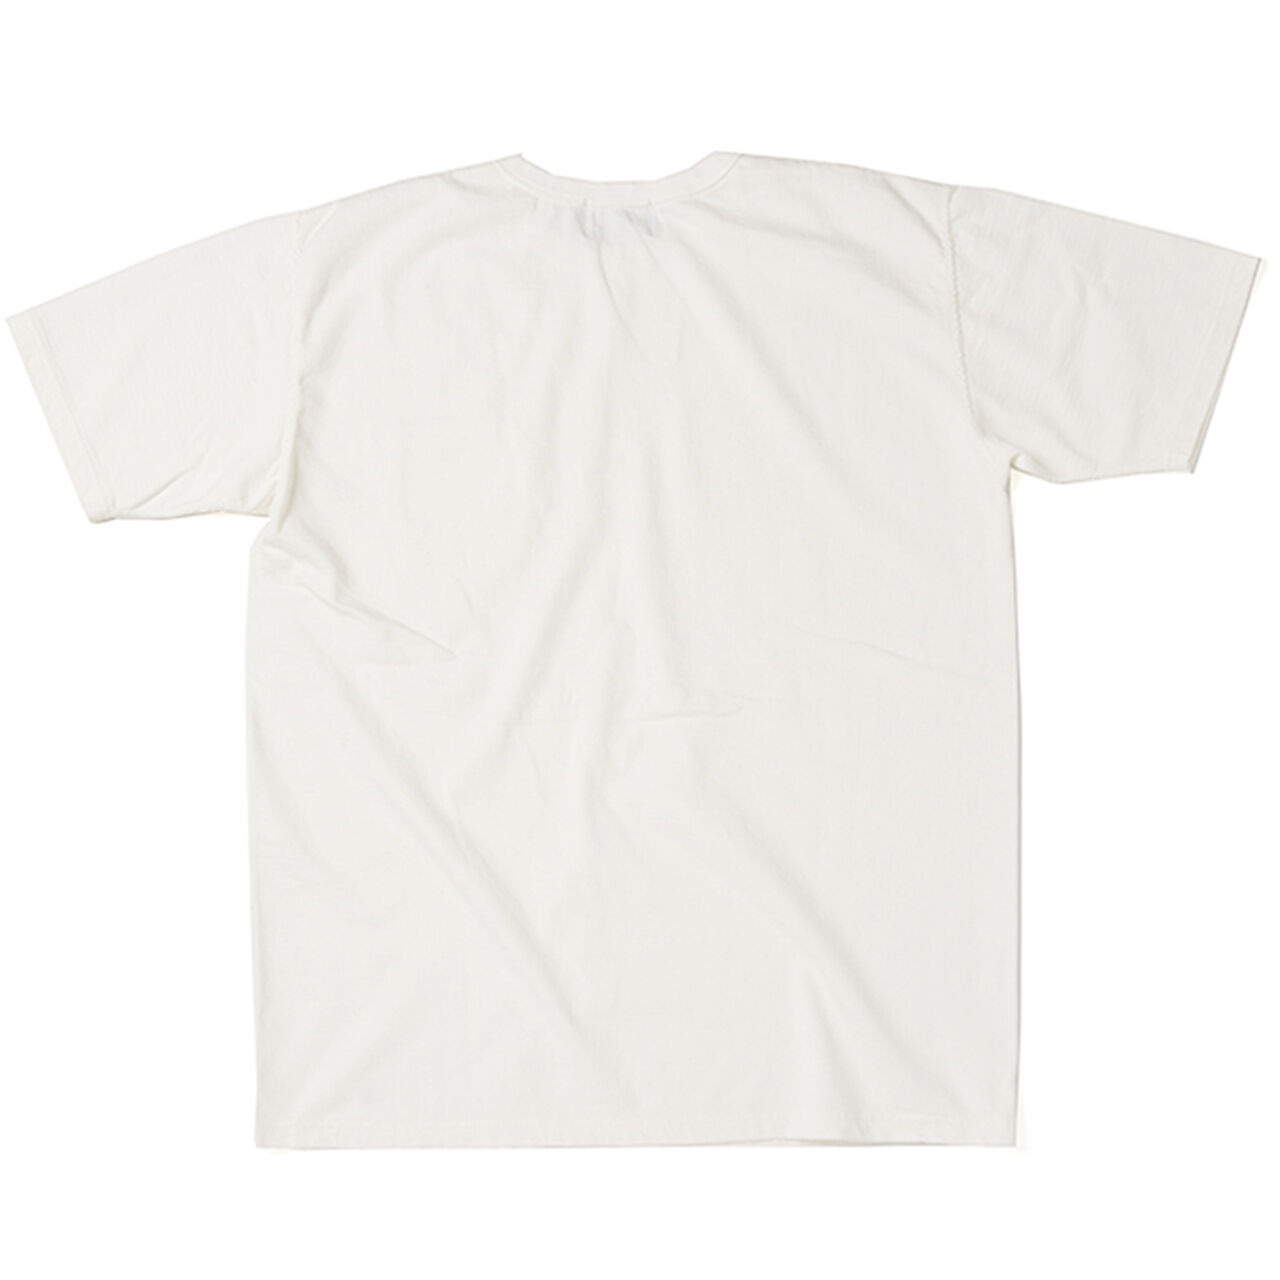 AWB T-Shirt – Sunwheel Shop